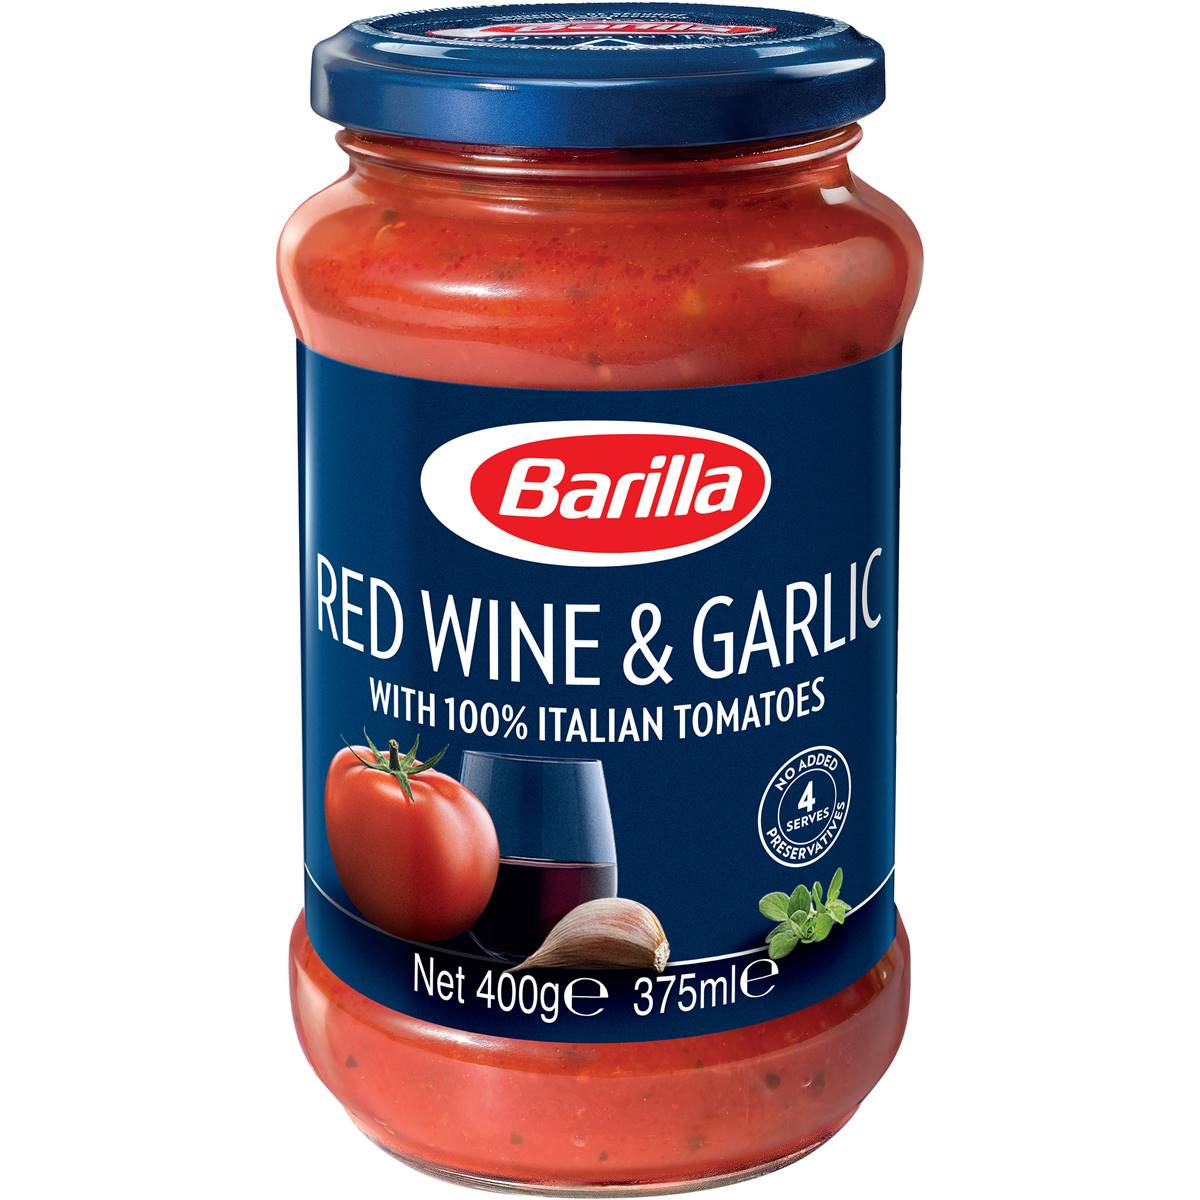 Calories in Barilla Red Wine And Garlic Pasta Sauce